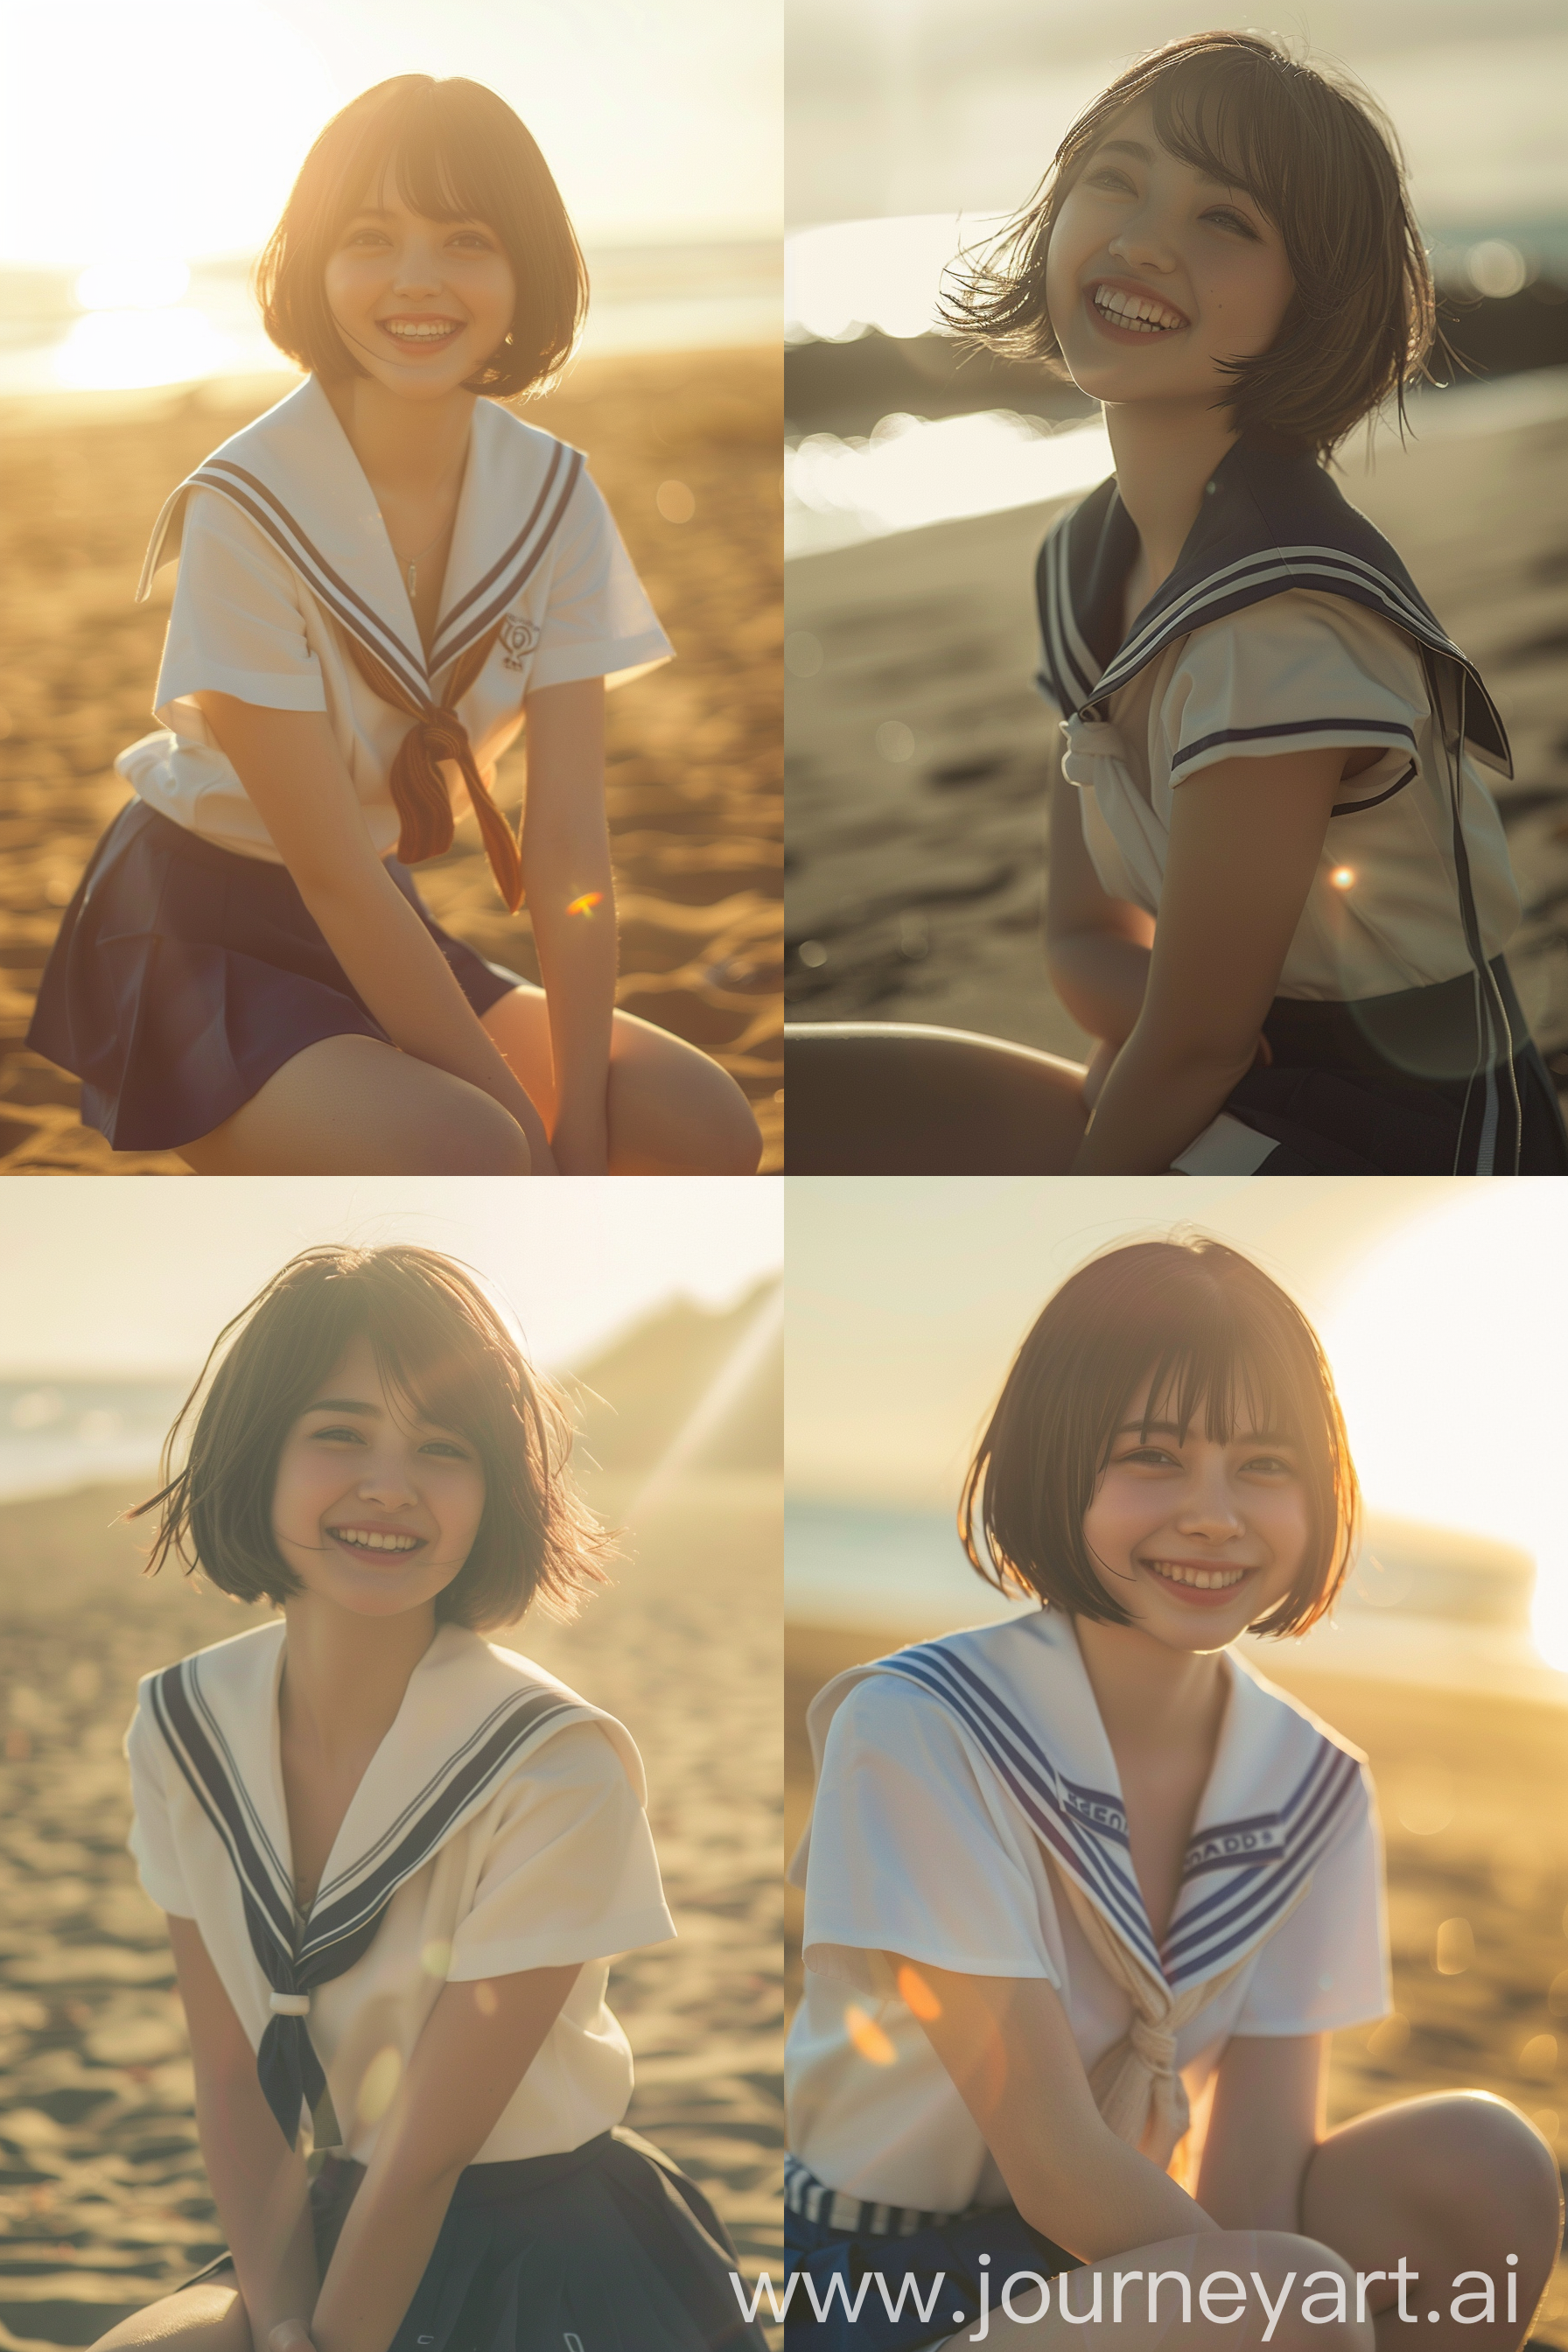 A beautiful girl, short hair, smiling, sailor uniform,, Kamakura beach, sunlight,highly detailed, knee shot, fujifim superia,by Hideaki Hamada,hyperrealistic,shot on Canon r5,50mm f1.4,photo by Rinko Kawauchi --ar 2:3 